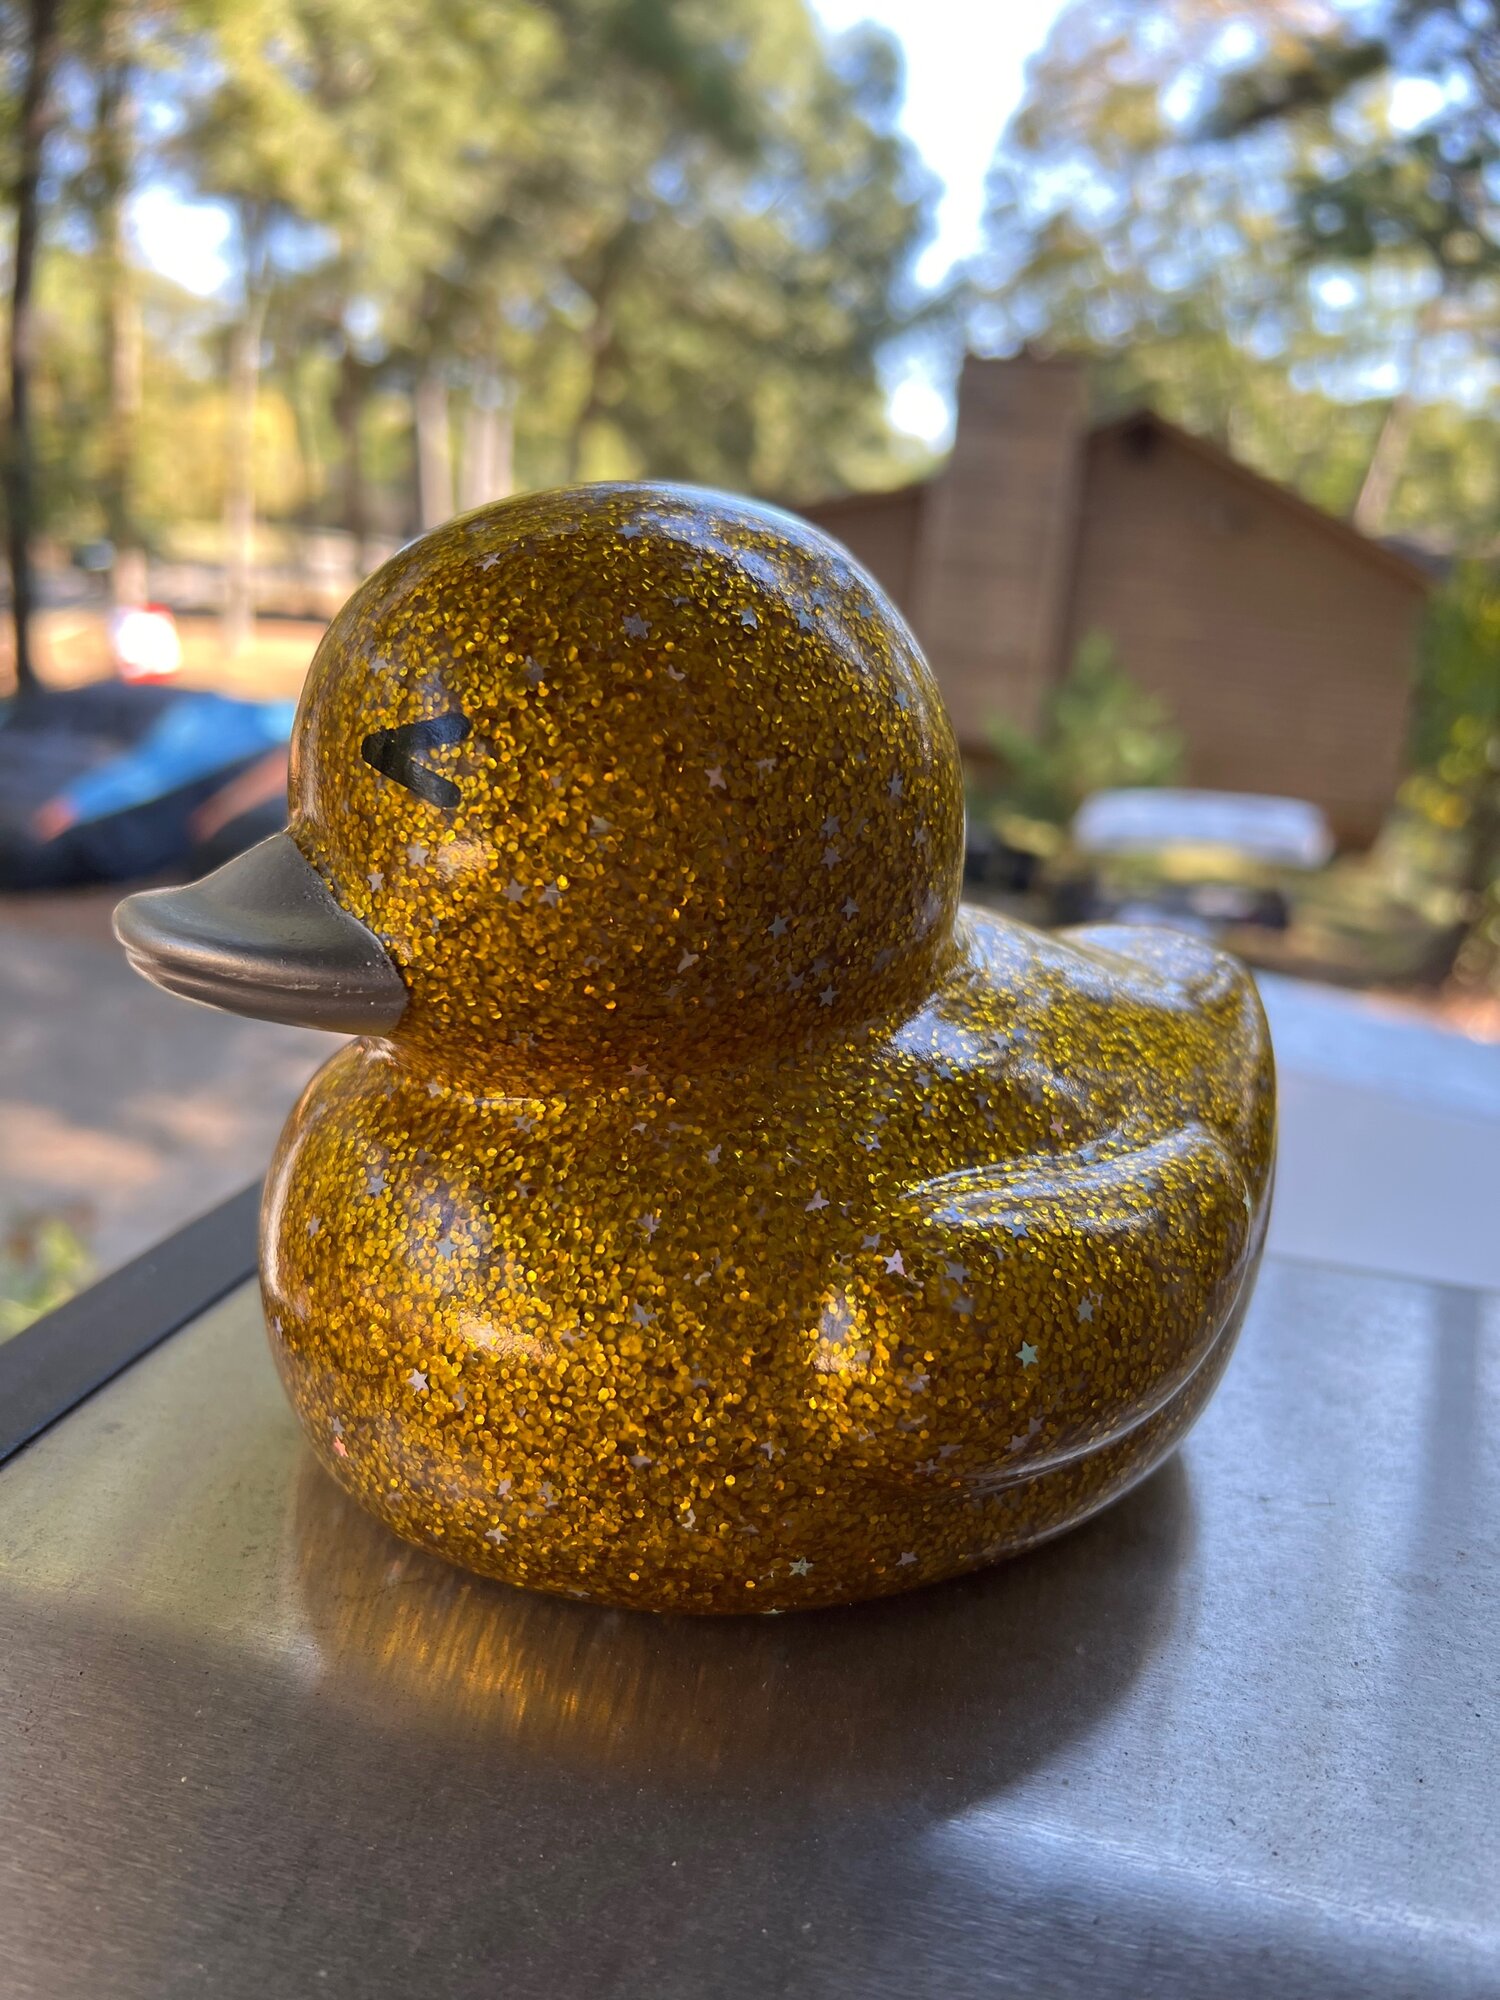 Glitter Ducks